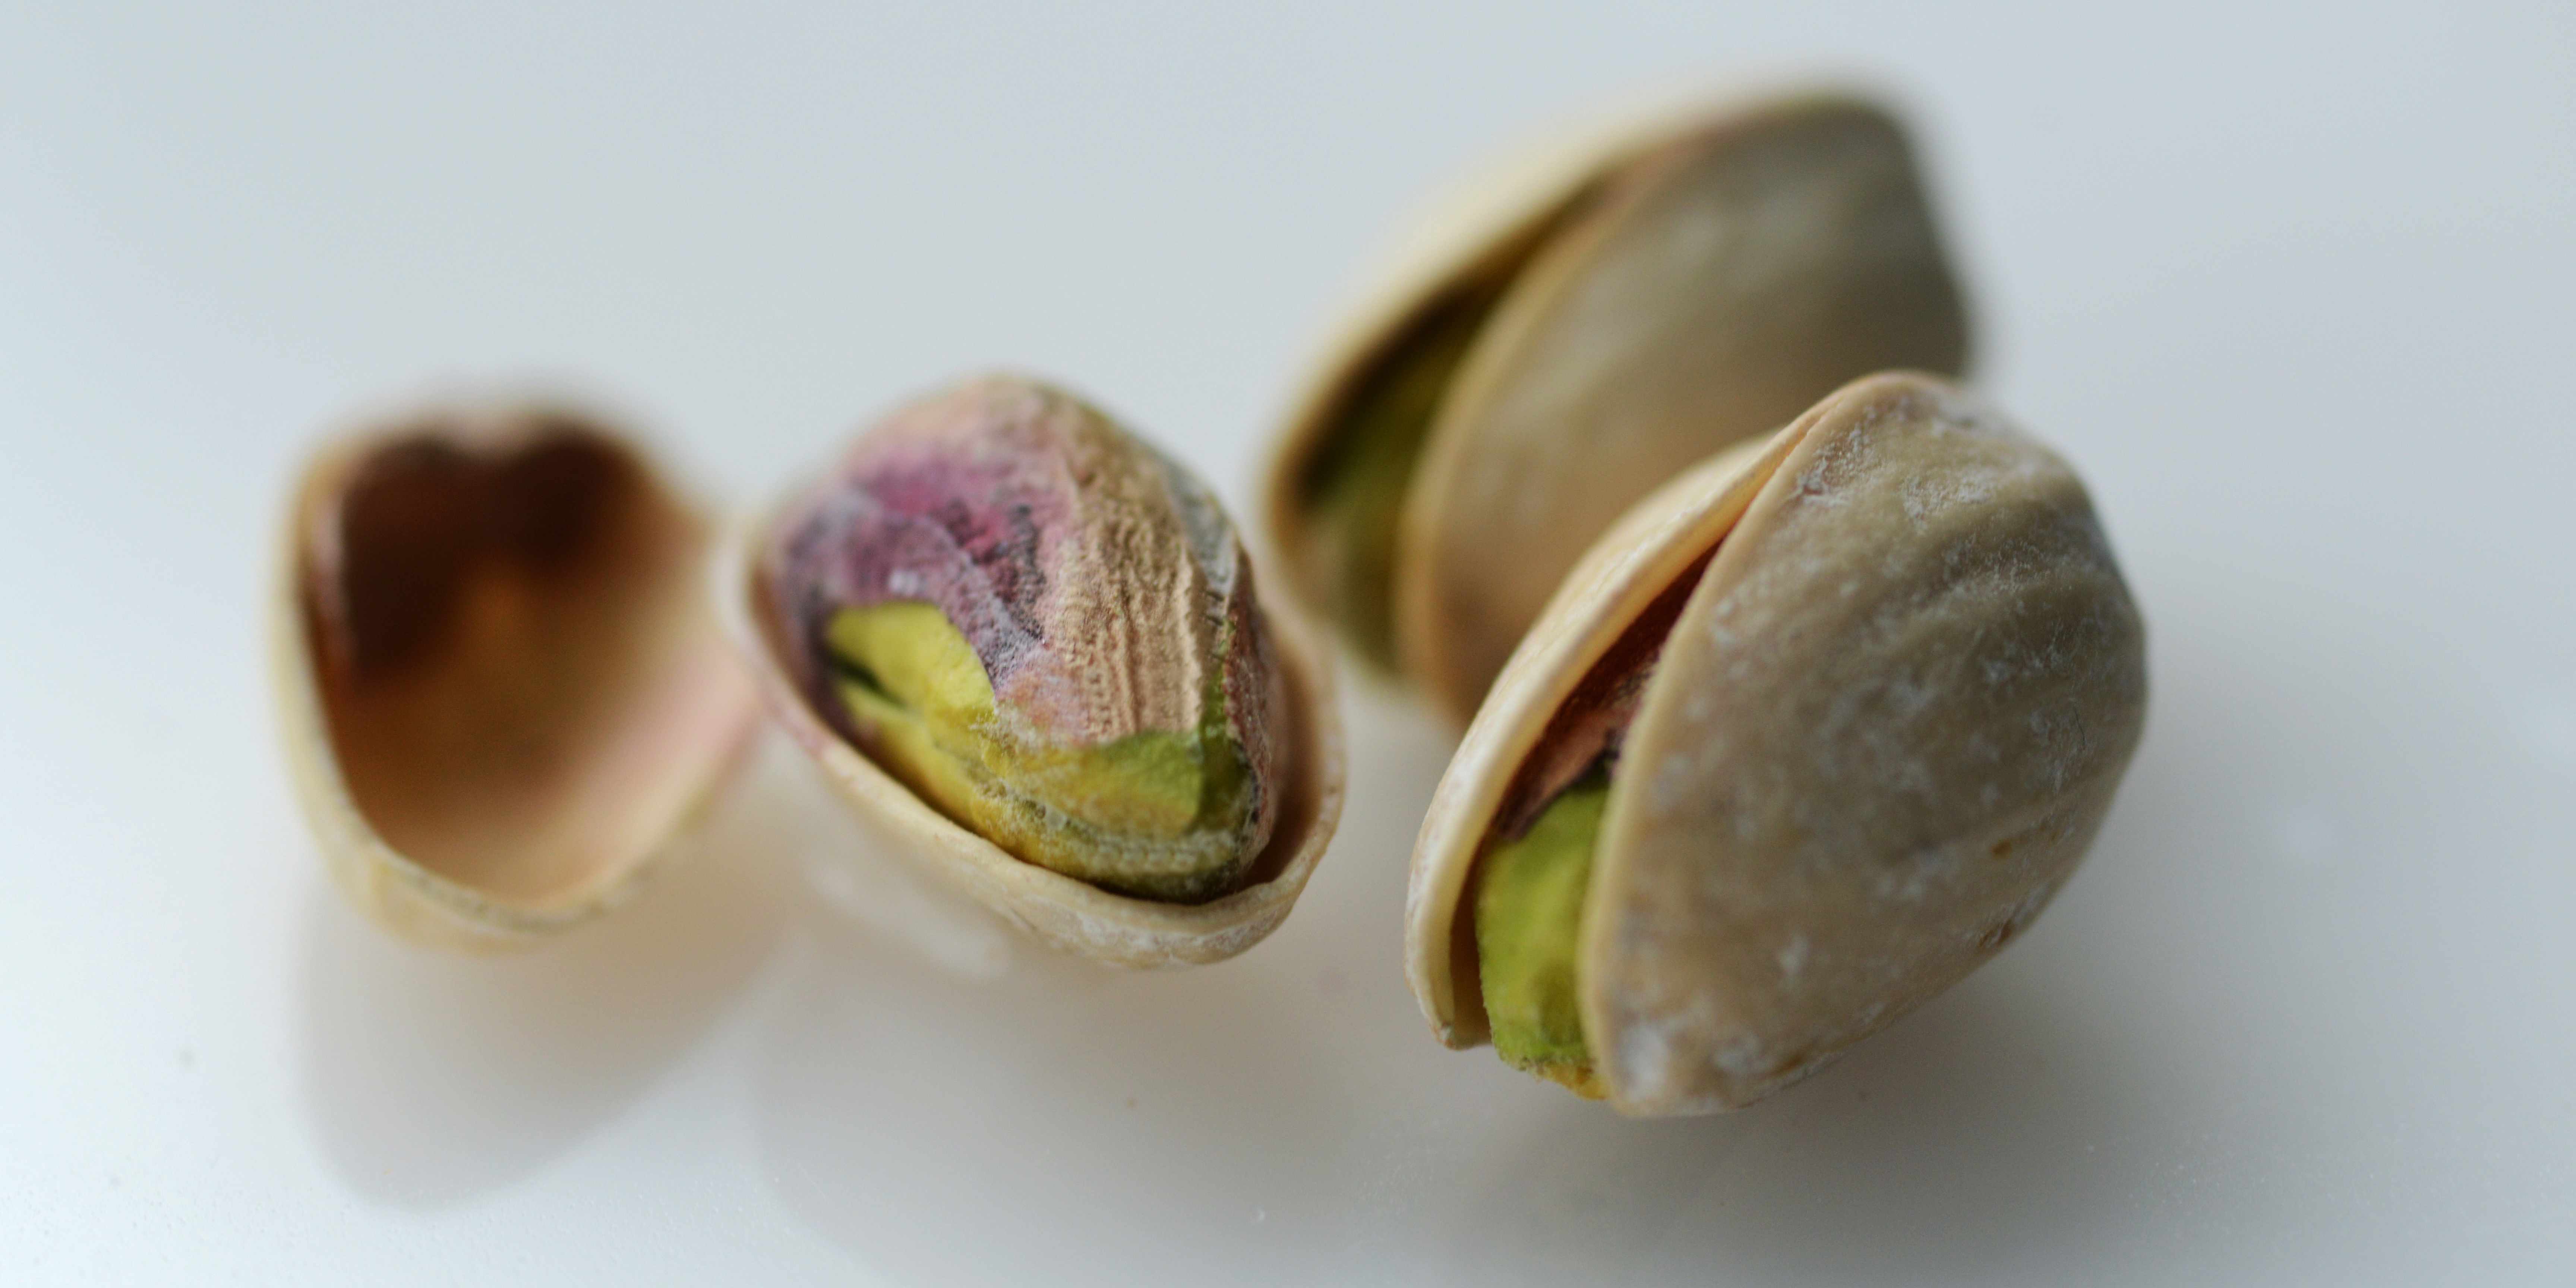 Fastachi pistachios